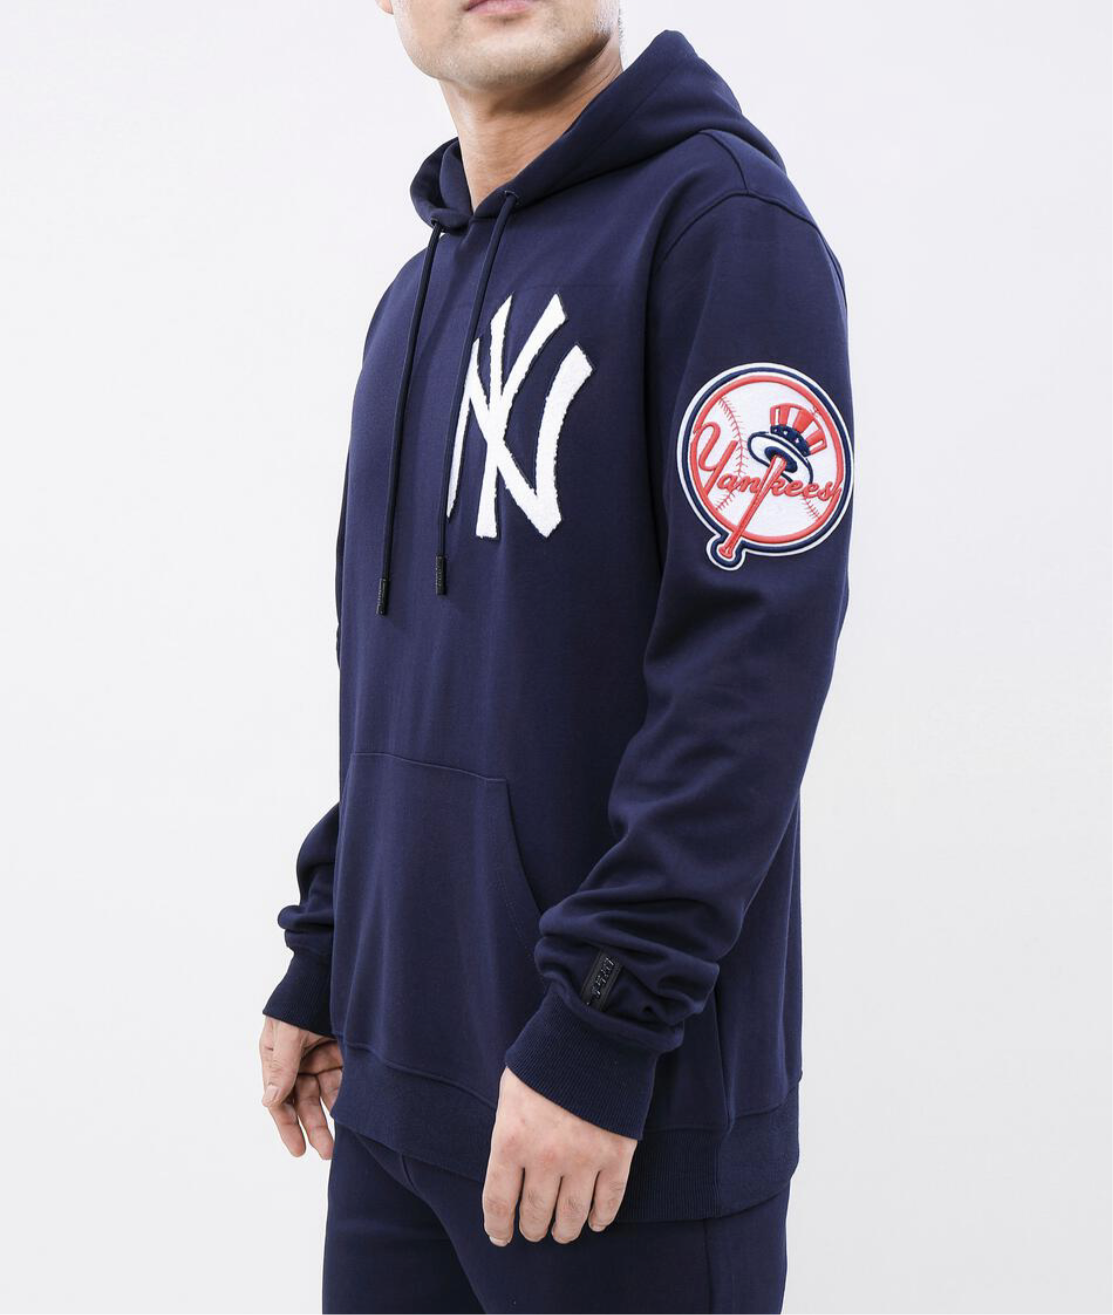 Men’s Pro Standard New York Yankees 2 Piece Sweat Suit Set